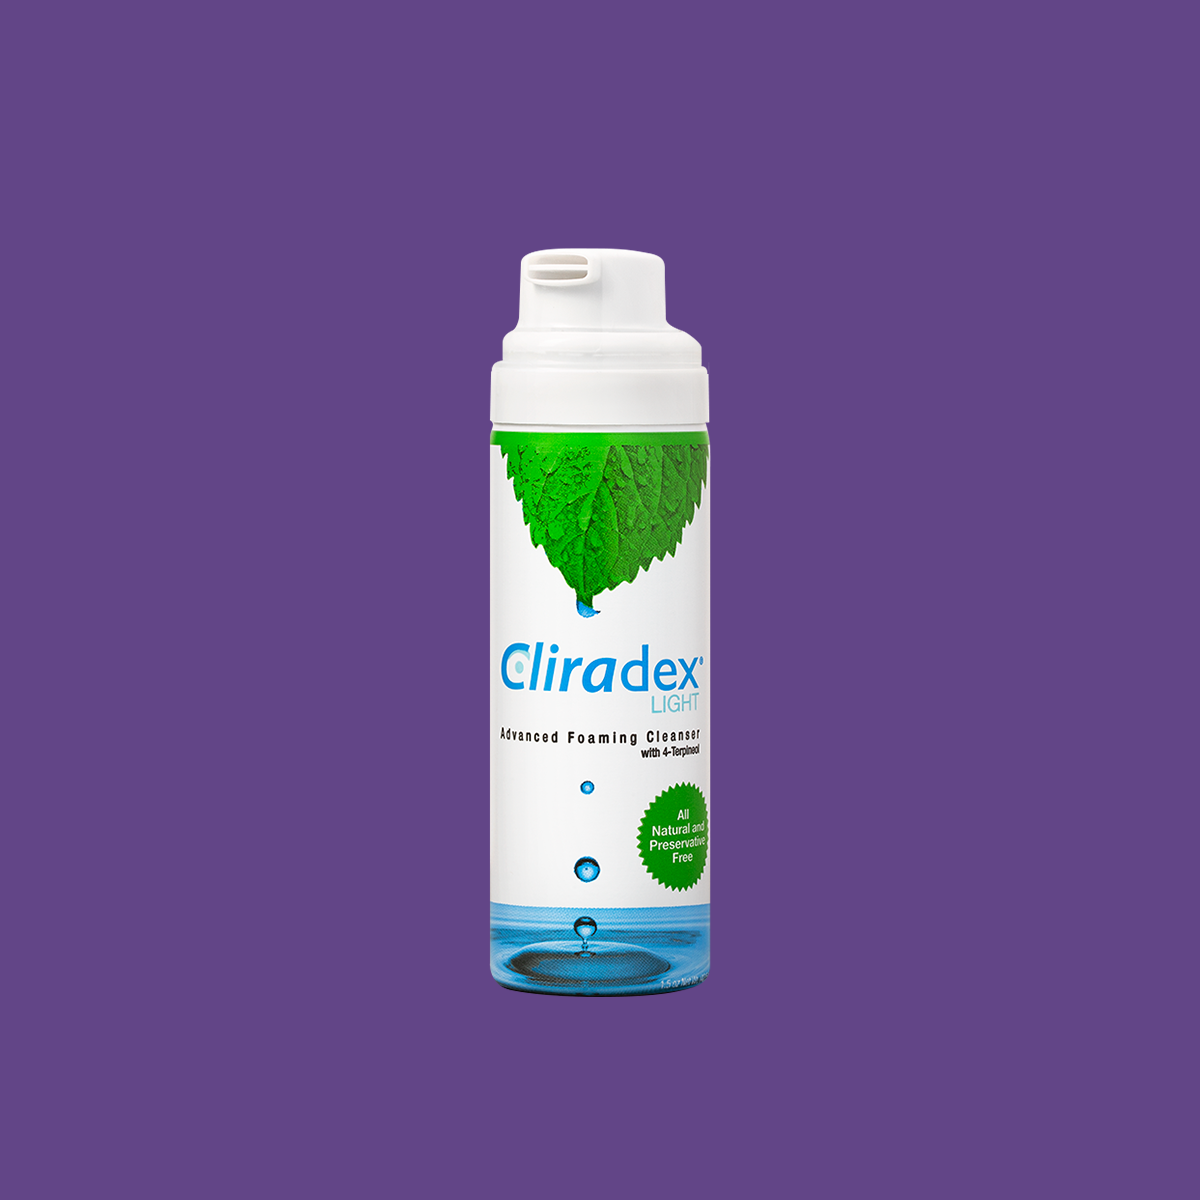 Cliradex Light Foam - Eyelash & Eyelid Cleanser - Tea Tree Oil Extract Foam